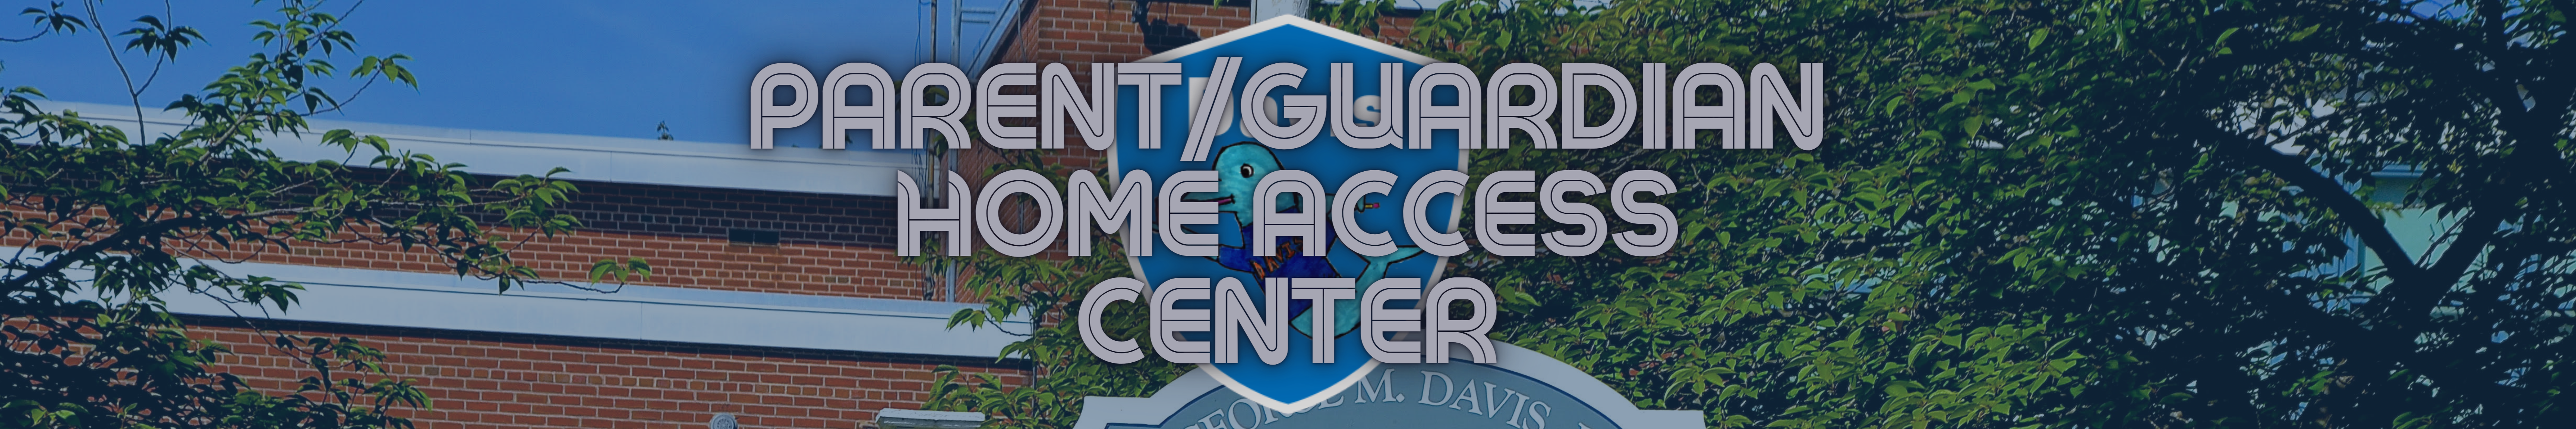 Parent/Guardian Home Access Center banner